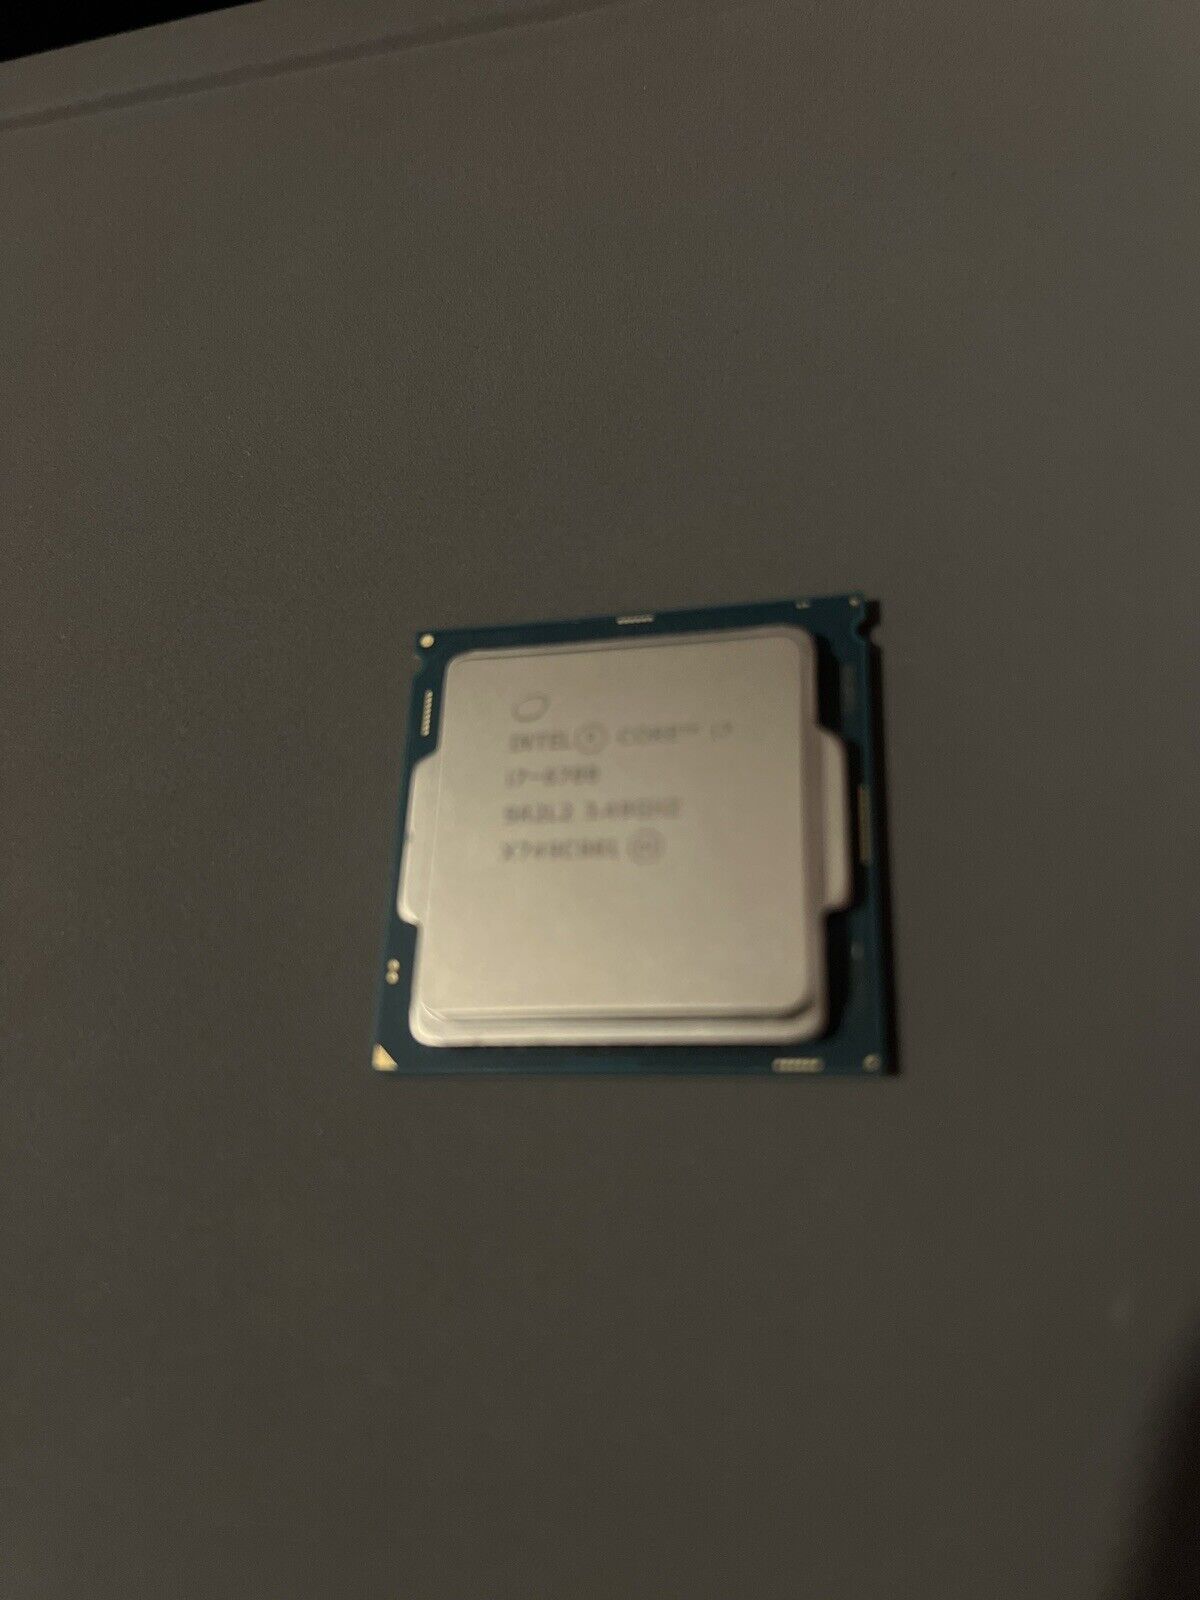 Intel Core i7-6700 3.4 GHz CPU Processor (SR2L3)